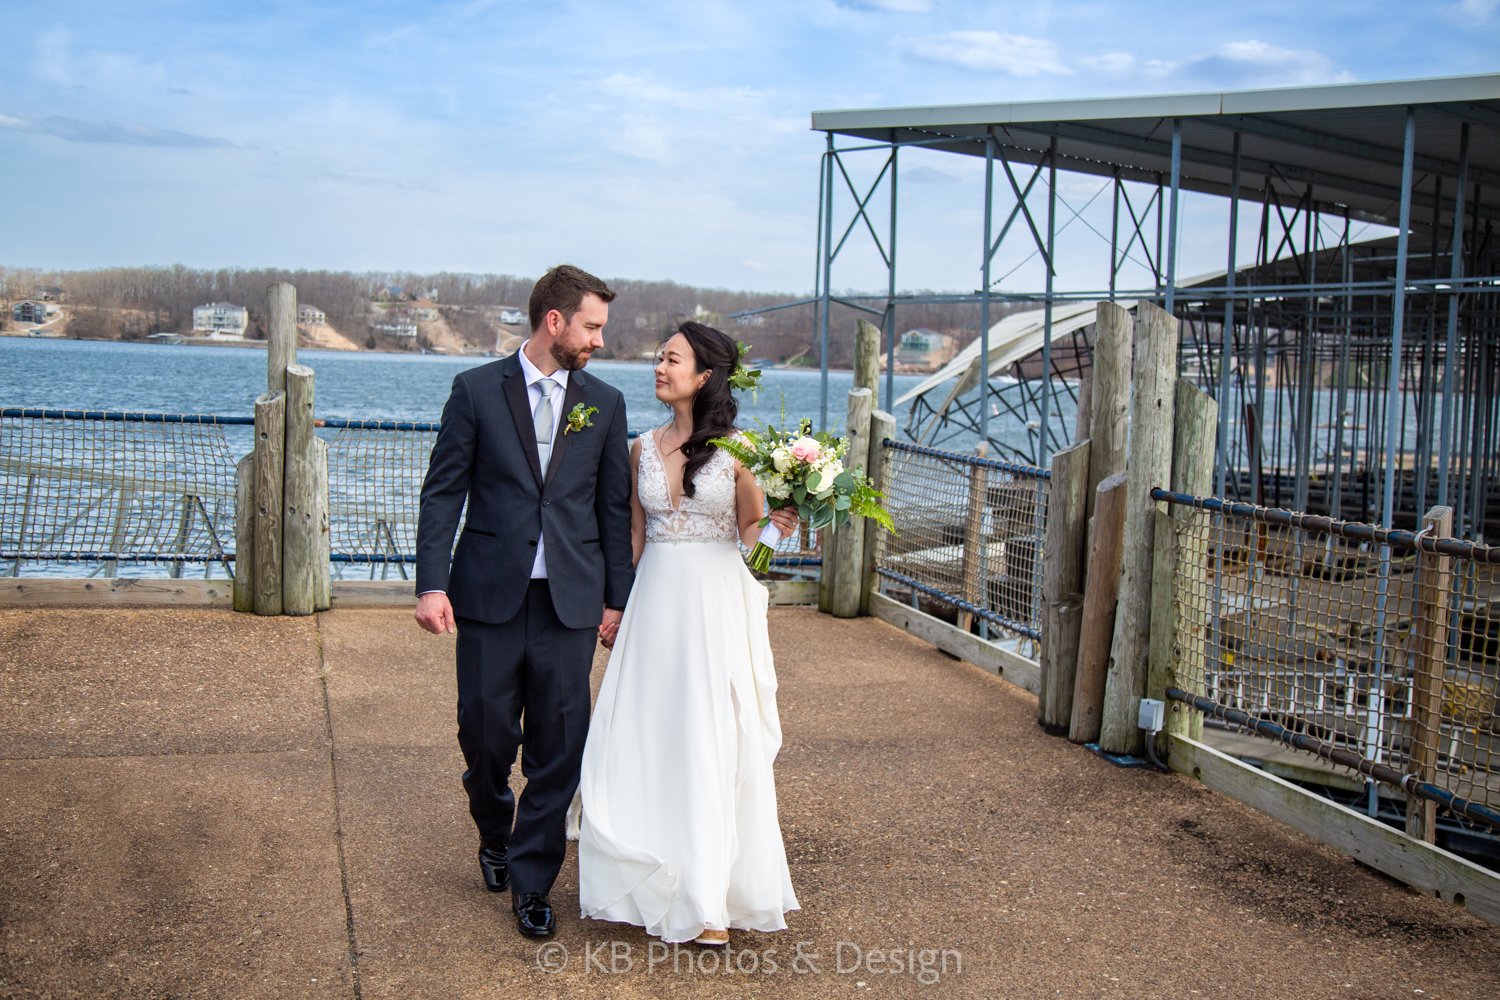 Wedding-Destination-Photography-Lake-of-the-Ozarks-Missouri-Wade-Natsuko-Jefferson-City-bride-groom-Lodge-of-Four-Seasons-wedding-photographer-KB-Photos-and-Design-169.jpg